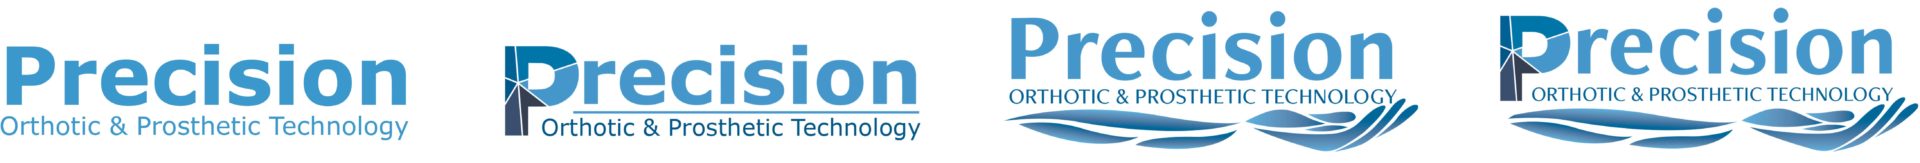 Precision Orthotic & Prosthetic Technology Logo Progression